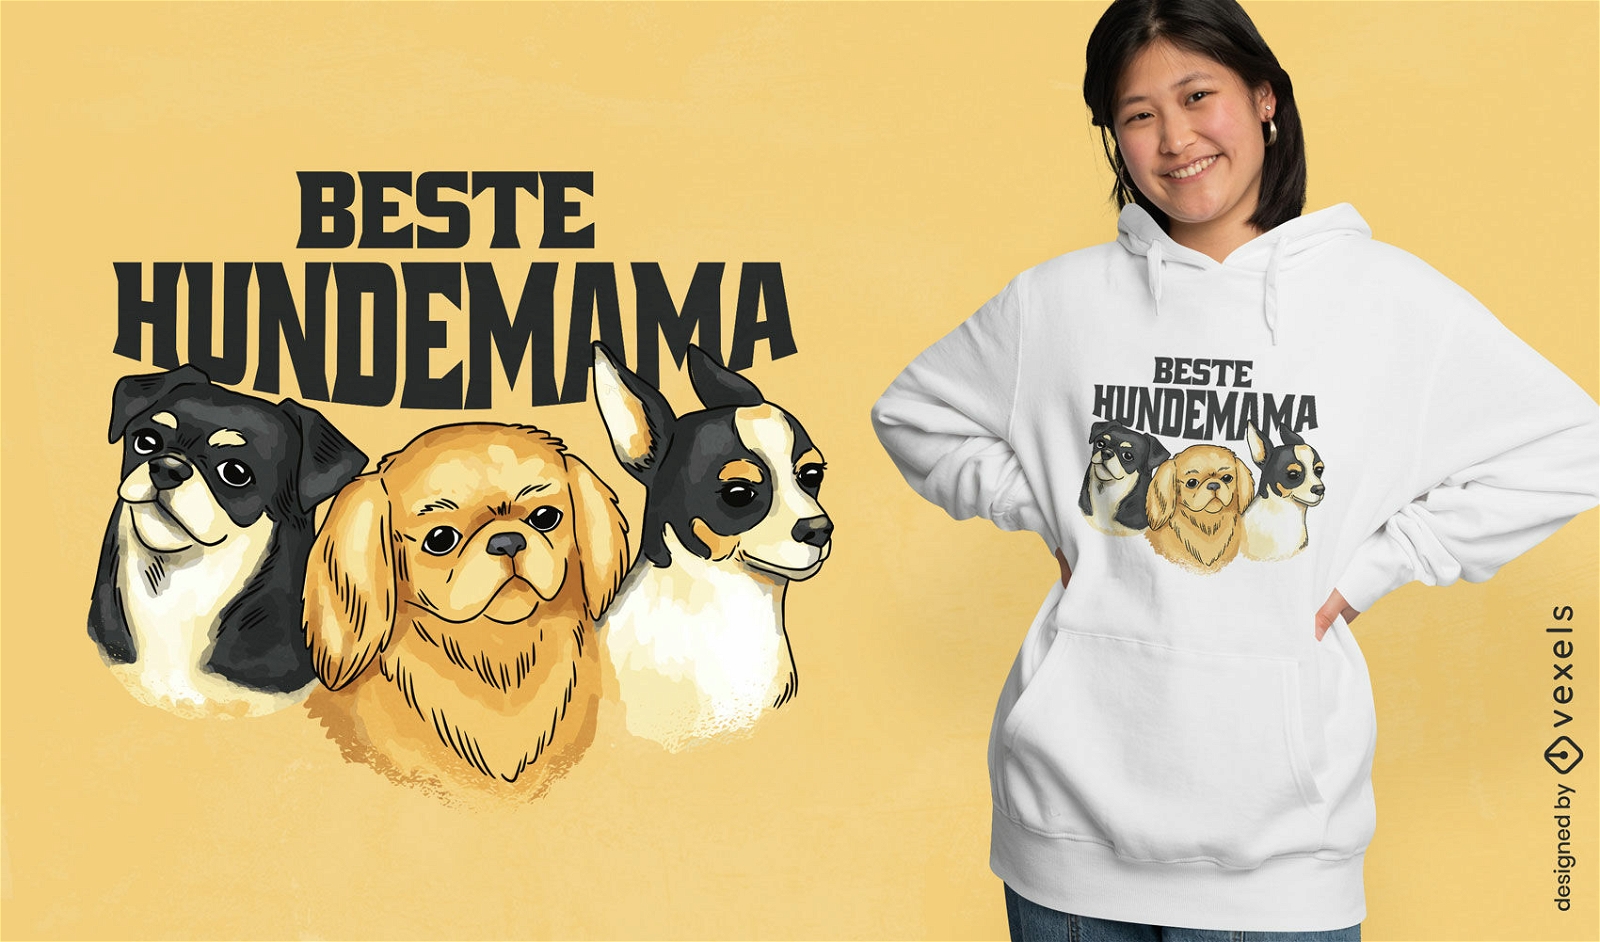 Bestes Hundemama-T-Shirt-Design